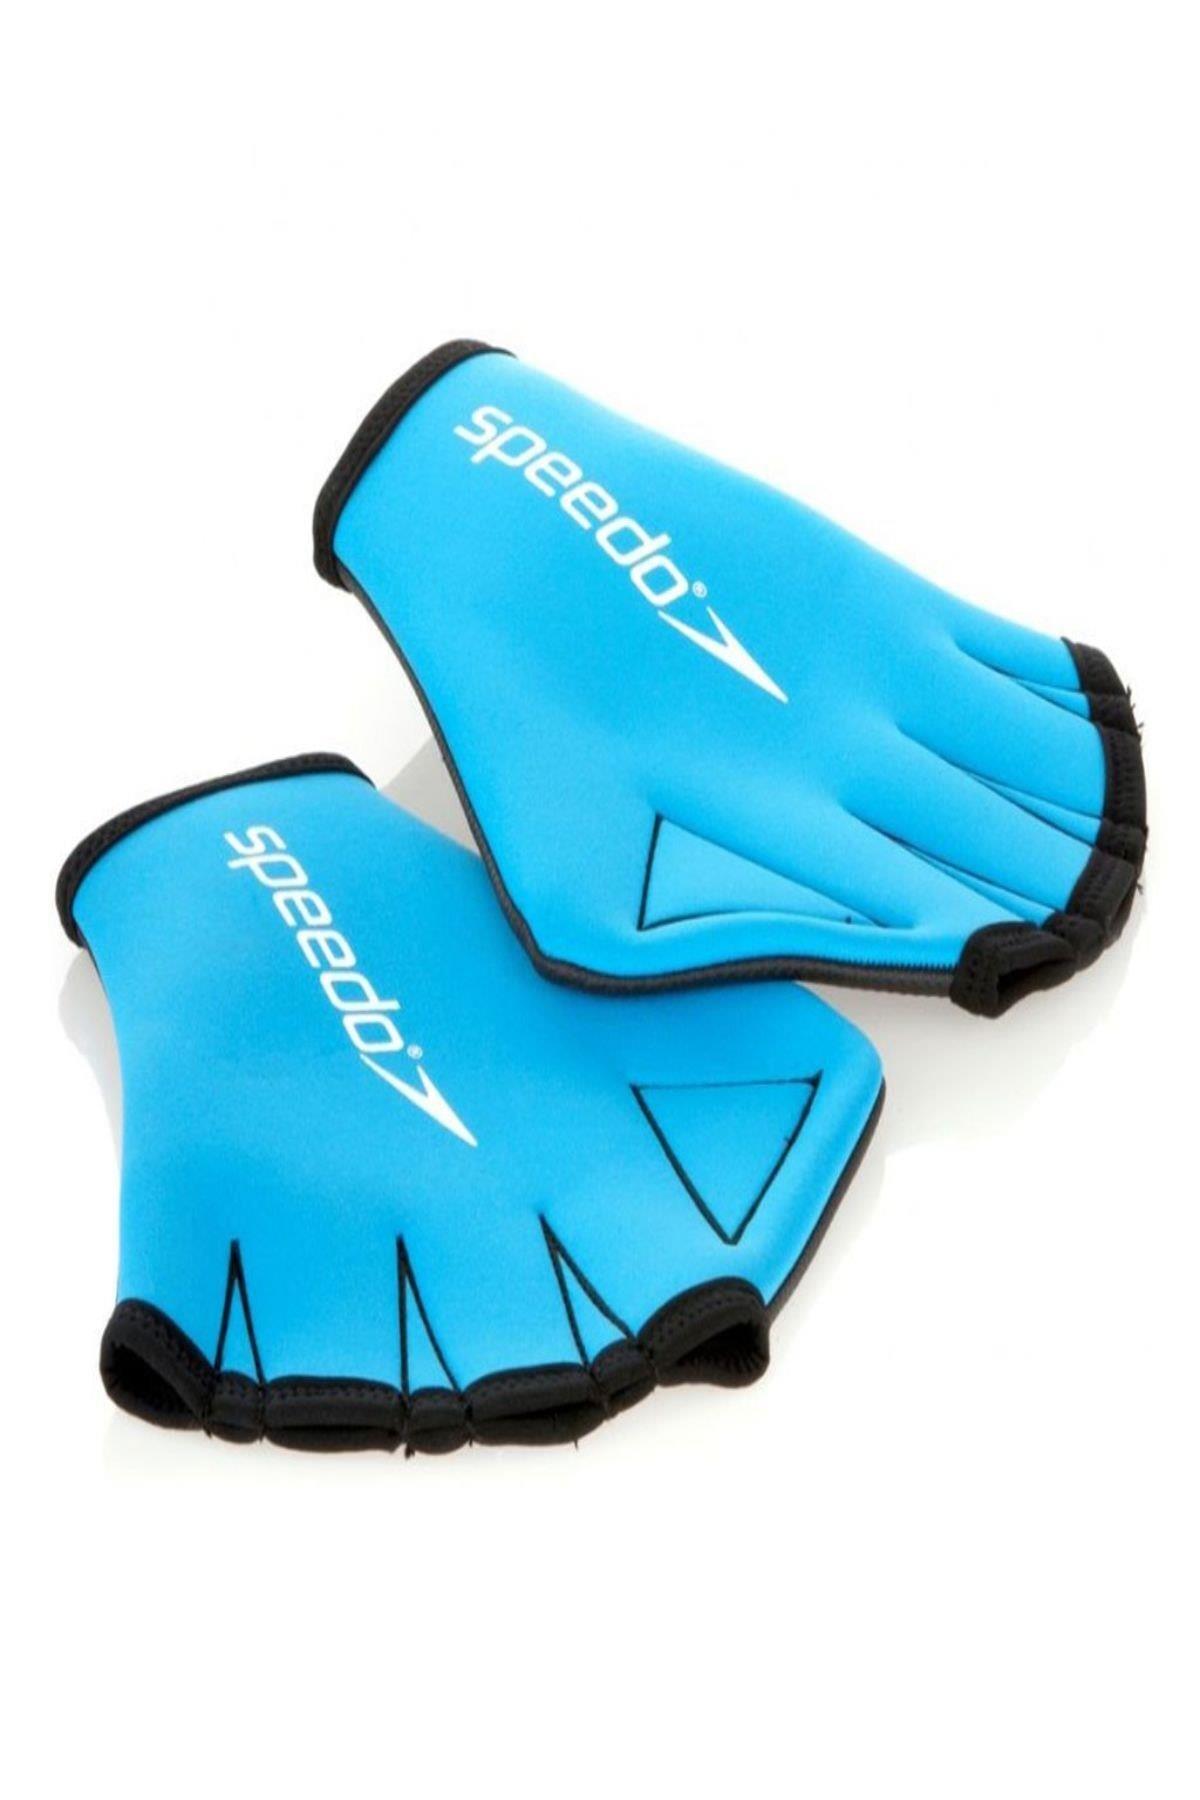 Speedo Aqua Glove Au Blue Yüzme Ördek Eldiveni Sp8069190309